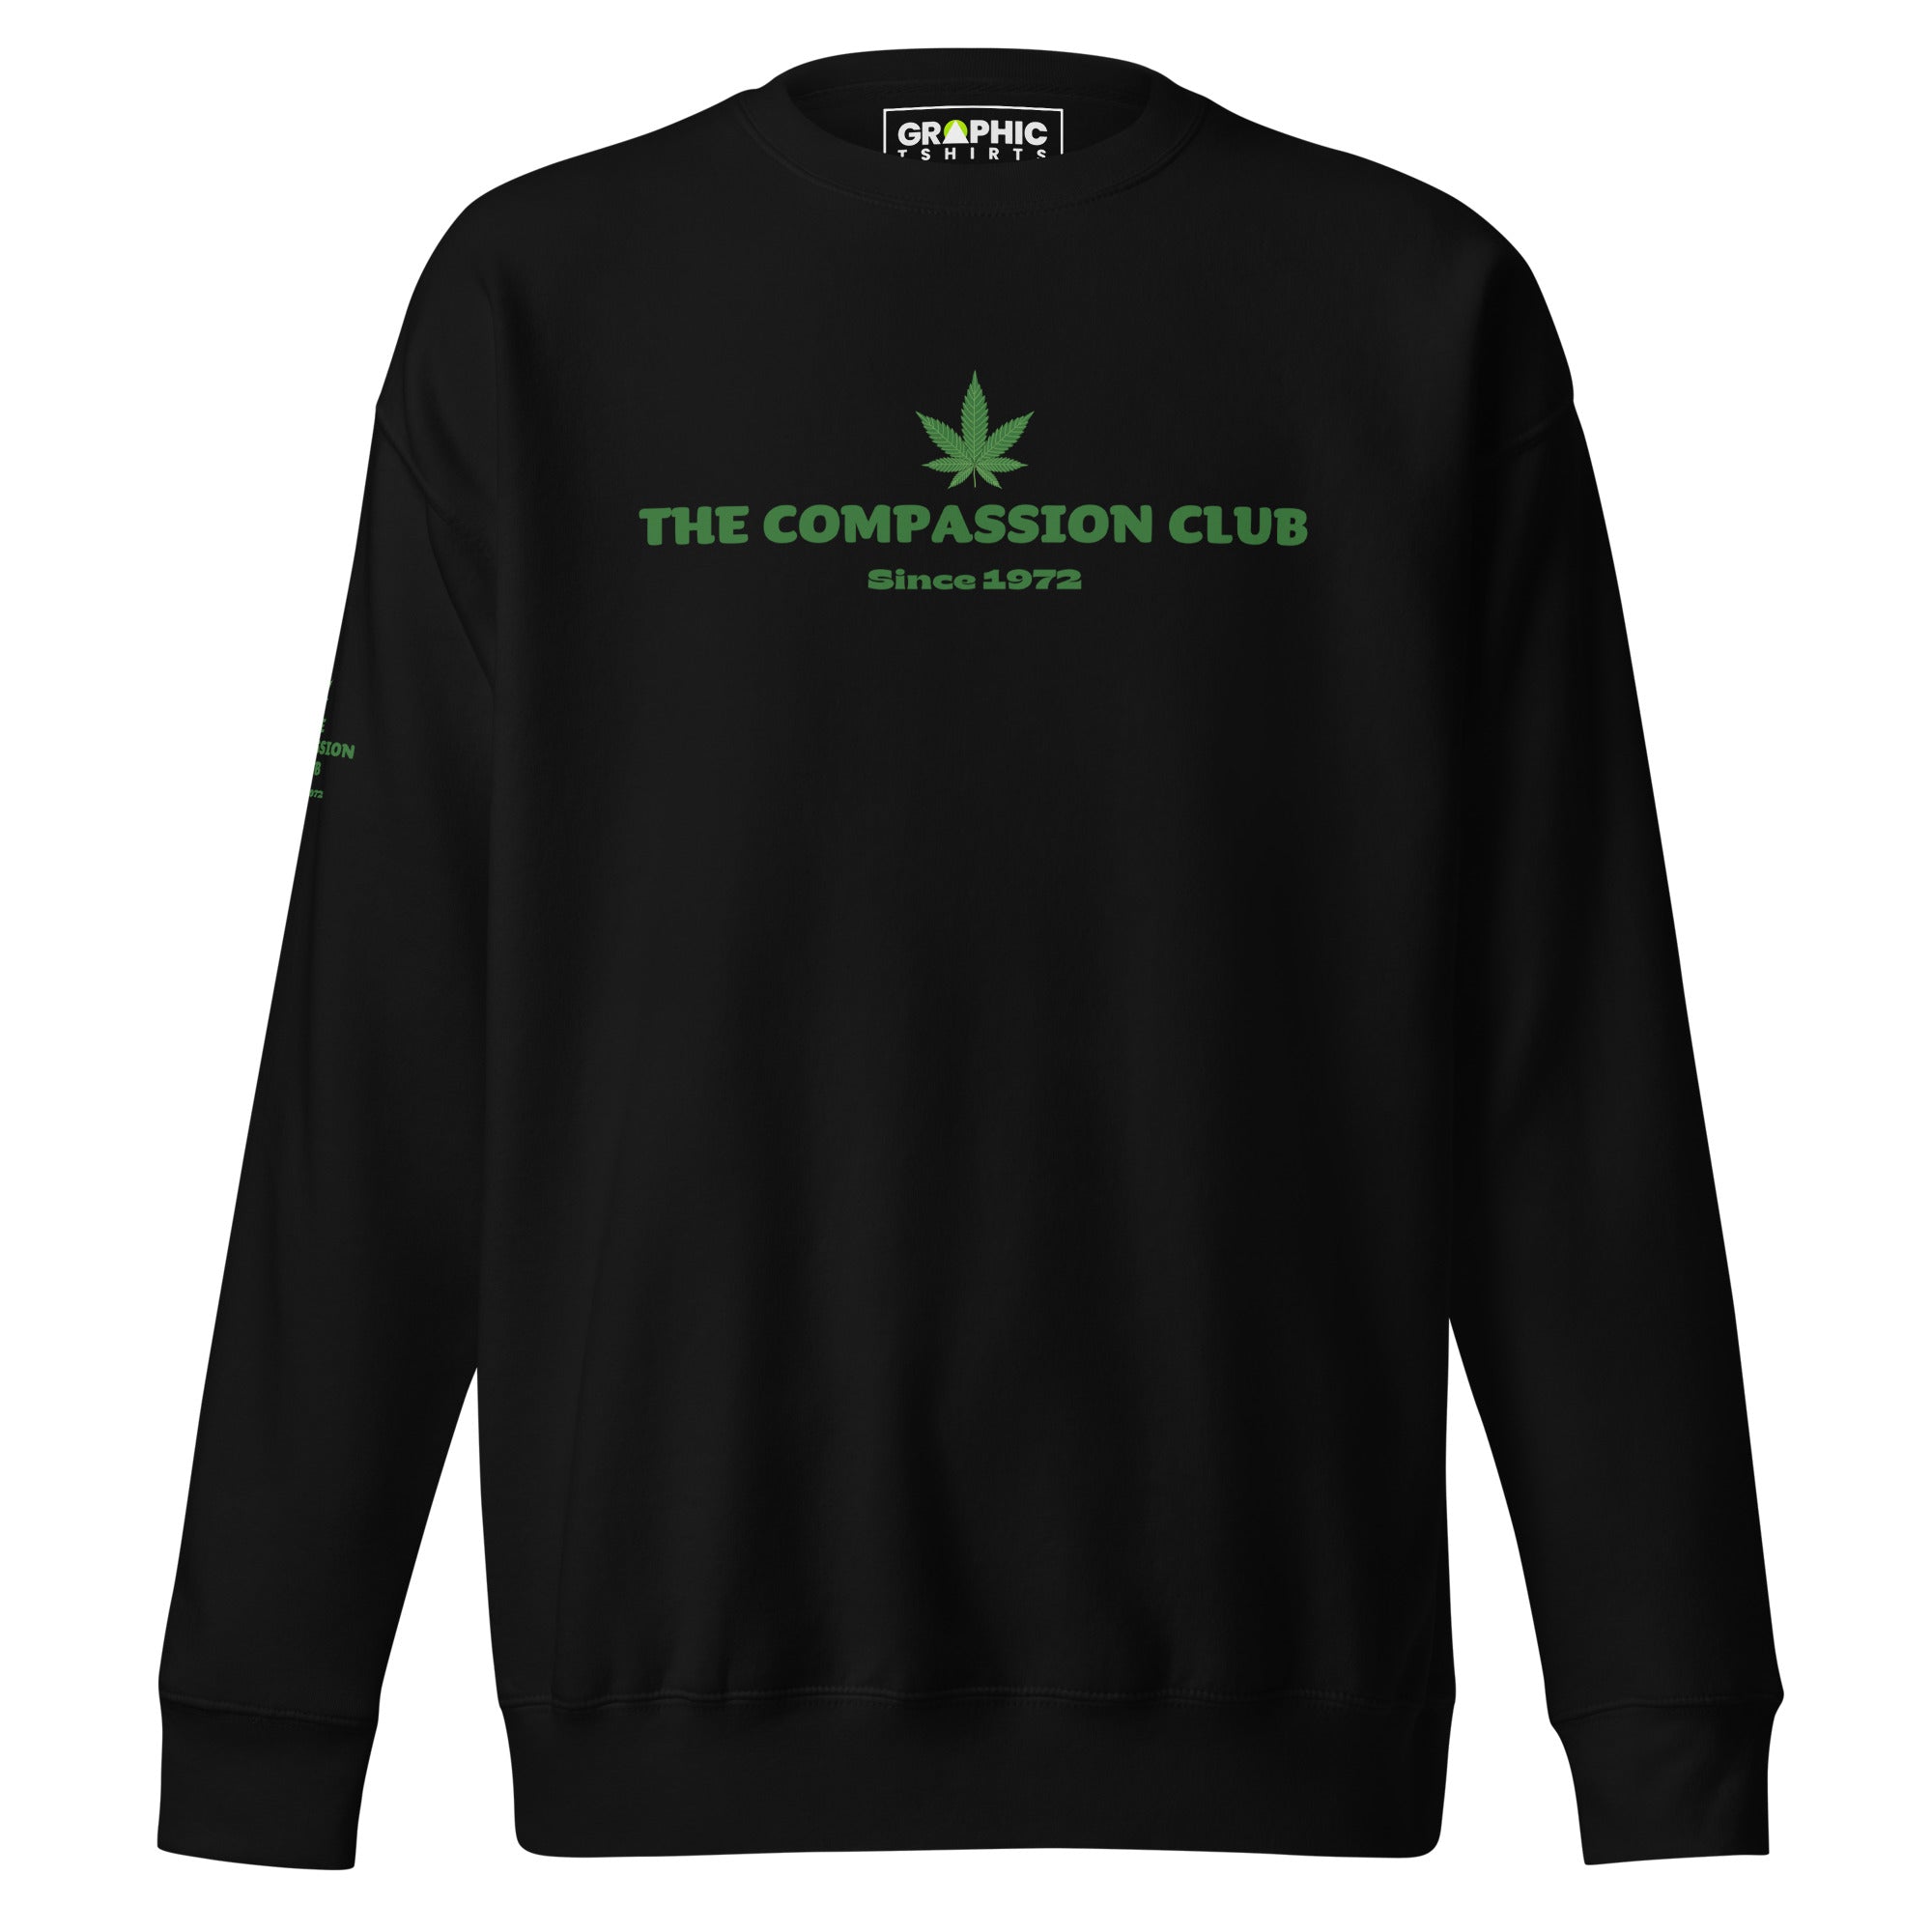 Unisex Premium Sweatshirt - The Compassion Club Since 1972 - GRAPHIC T-SHIRTS